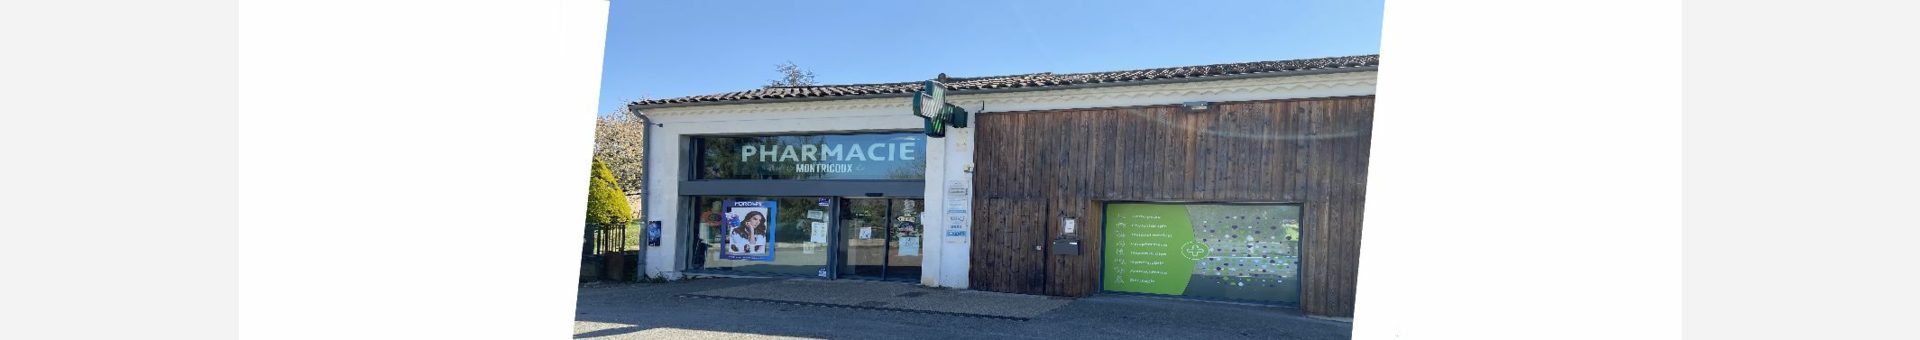 Pharmacie de Montricoux,Montricoux